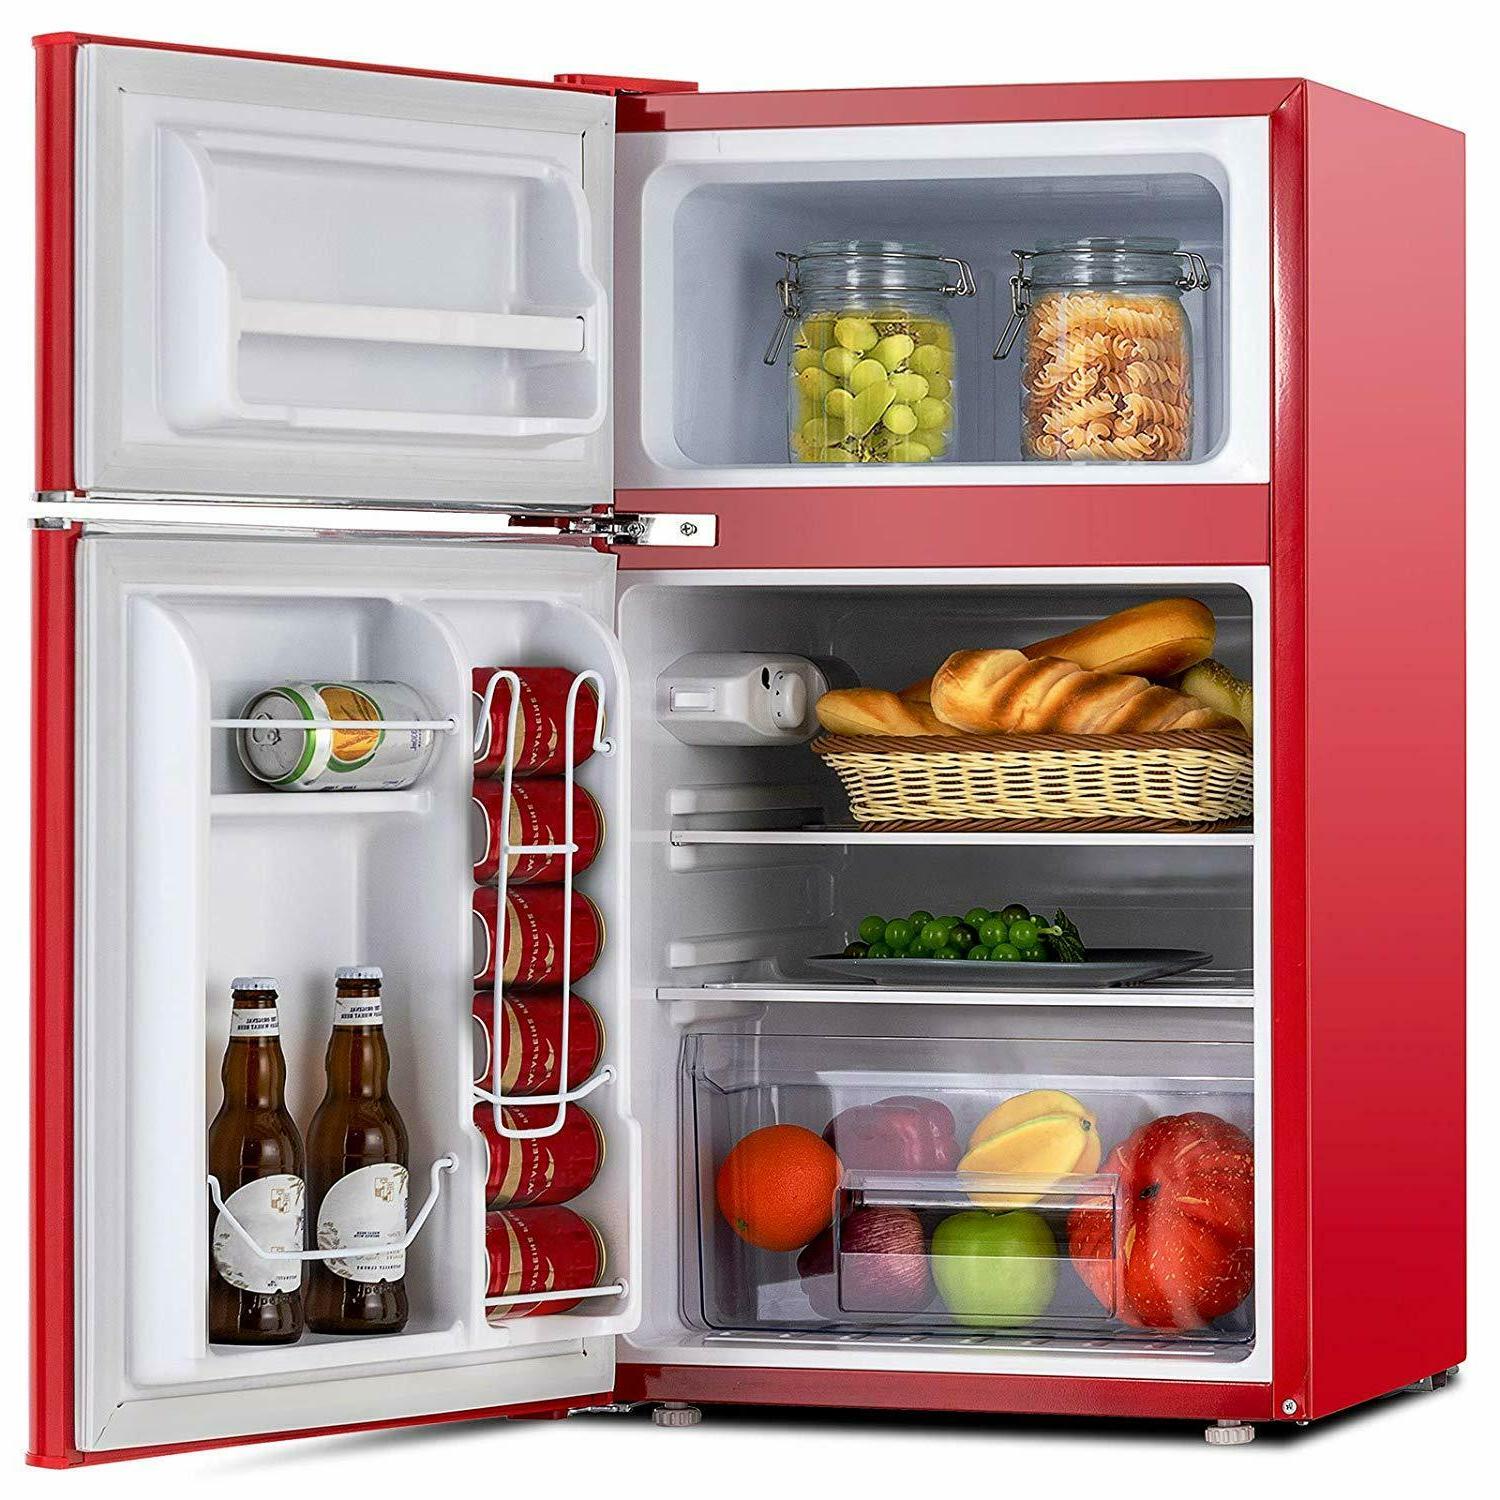 Mini Refrigerator Market Market to cross US$ 2.22 Billion by 2027, Says ...